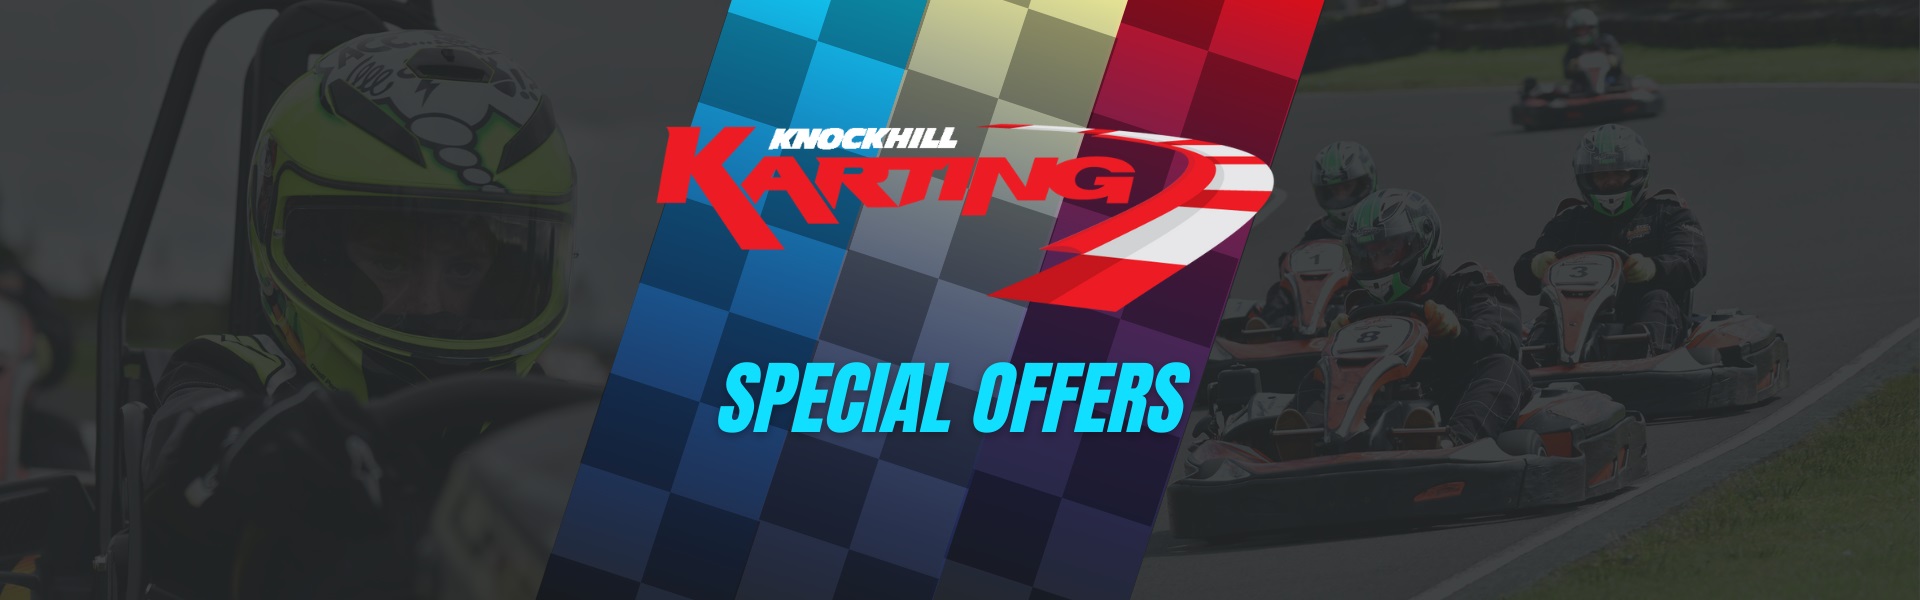 September Karting Special Offers